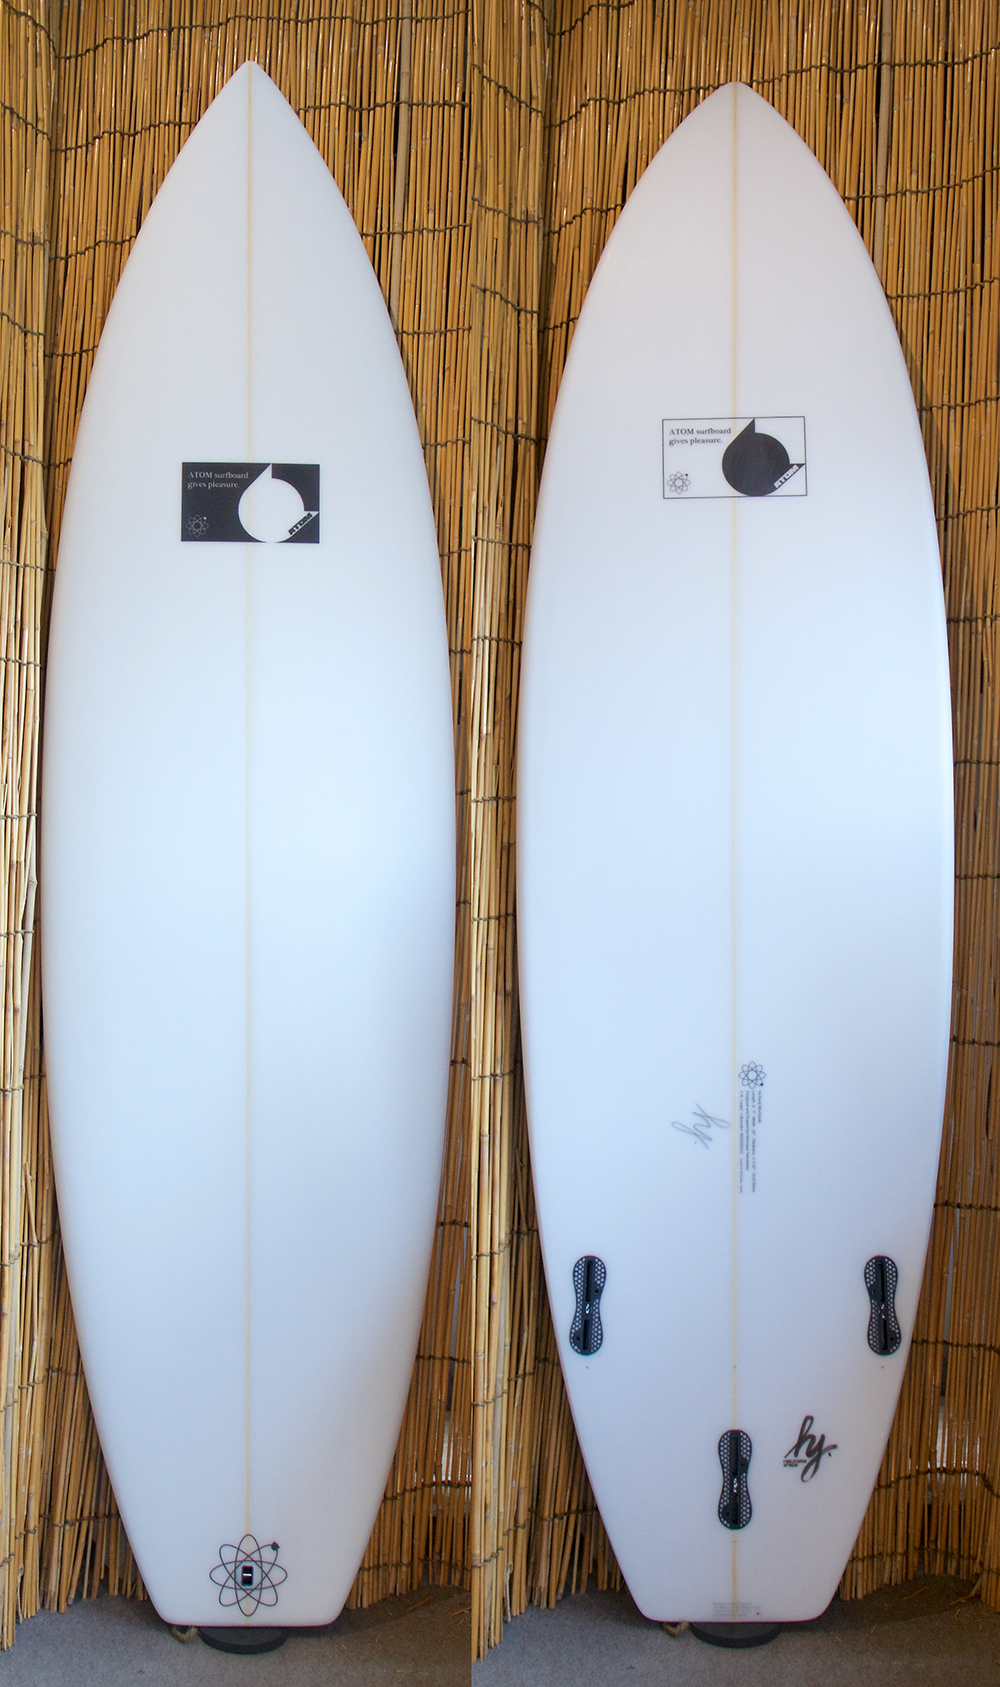 ATOM Surfboard Leaps'n Bounds+ model